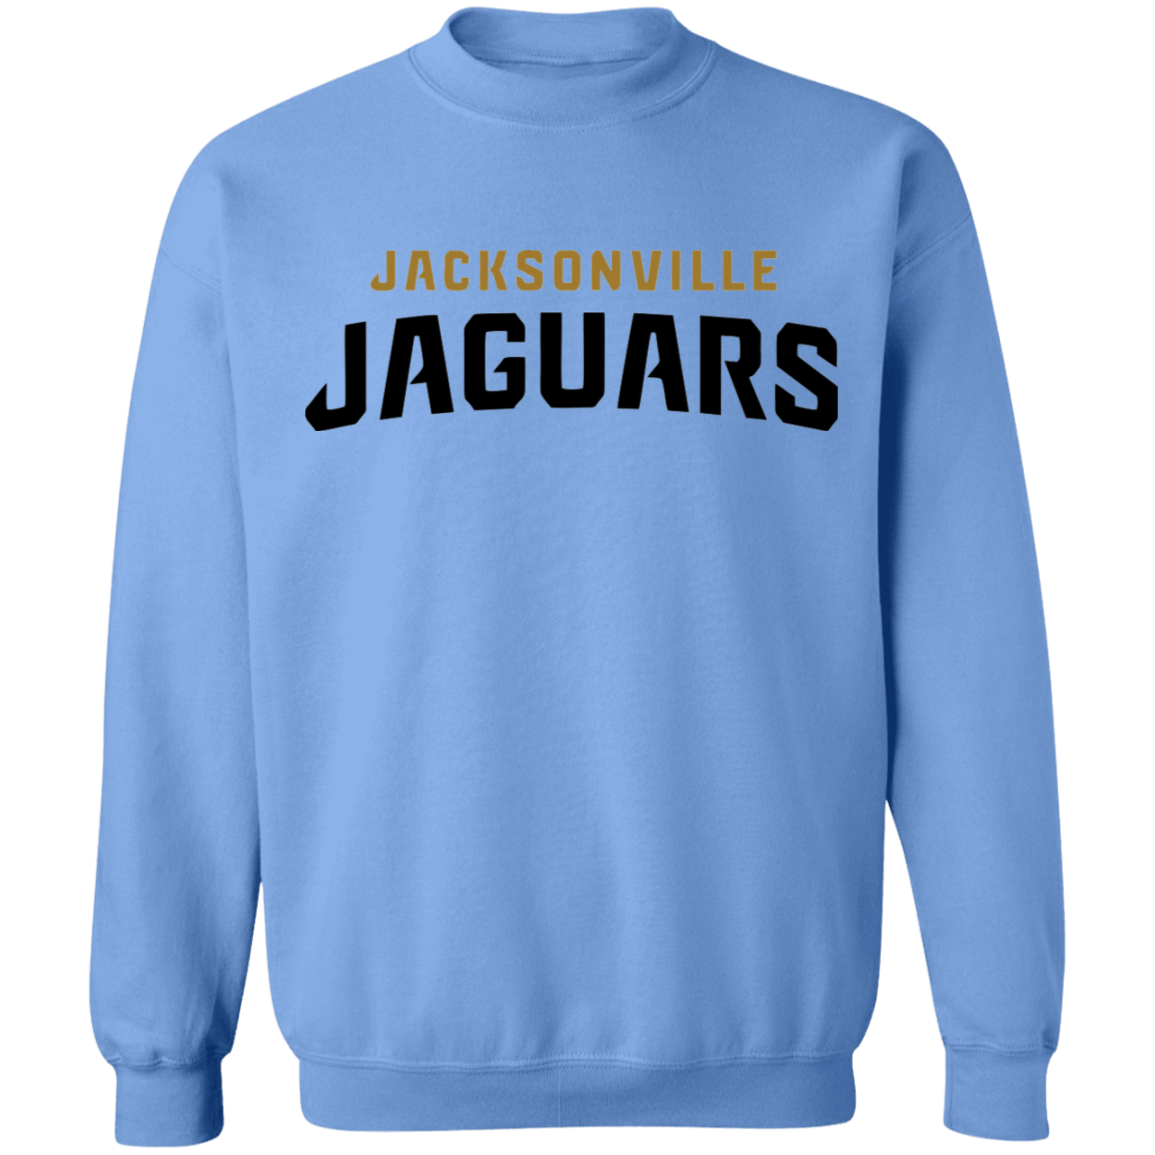 jacksonville jaguars crewneck